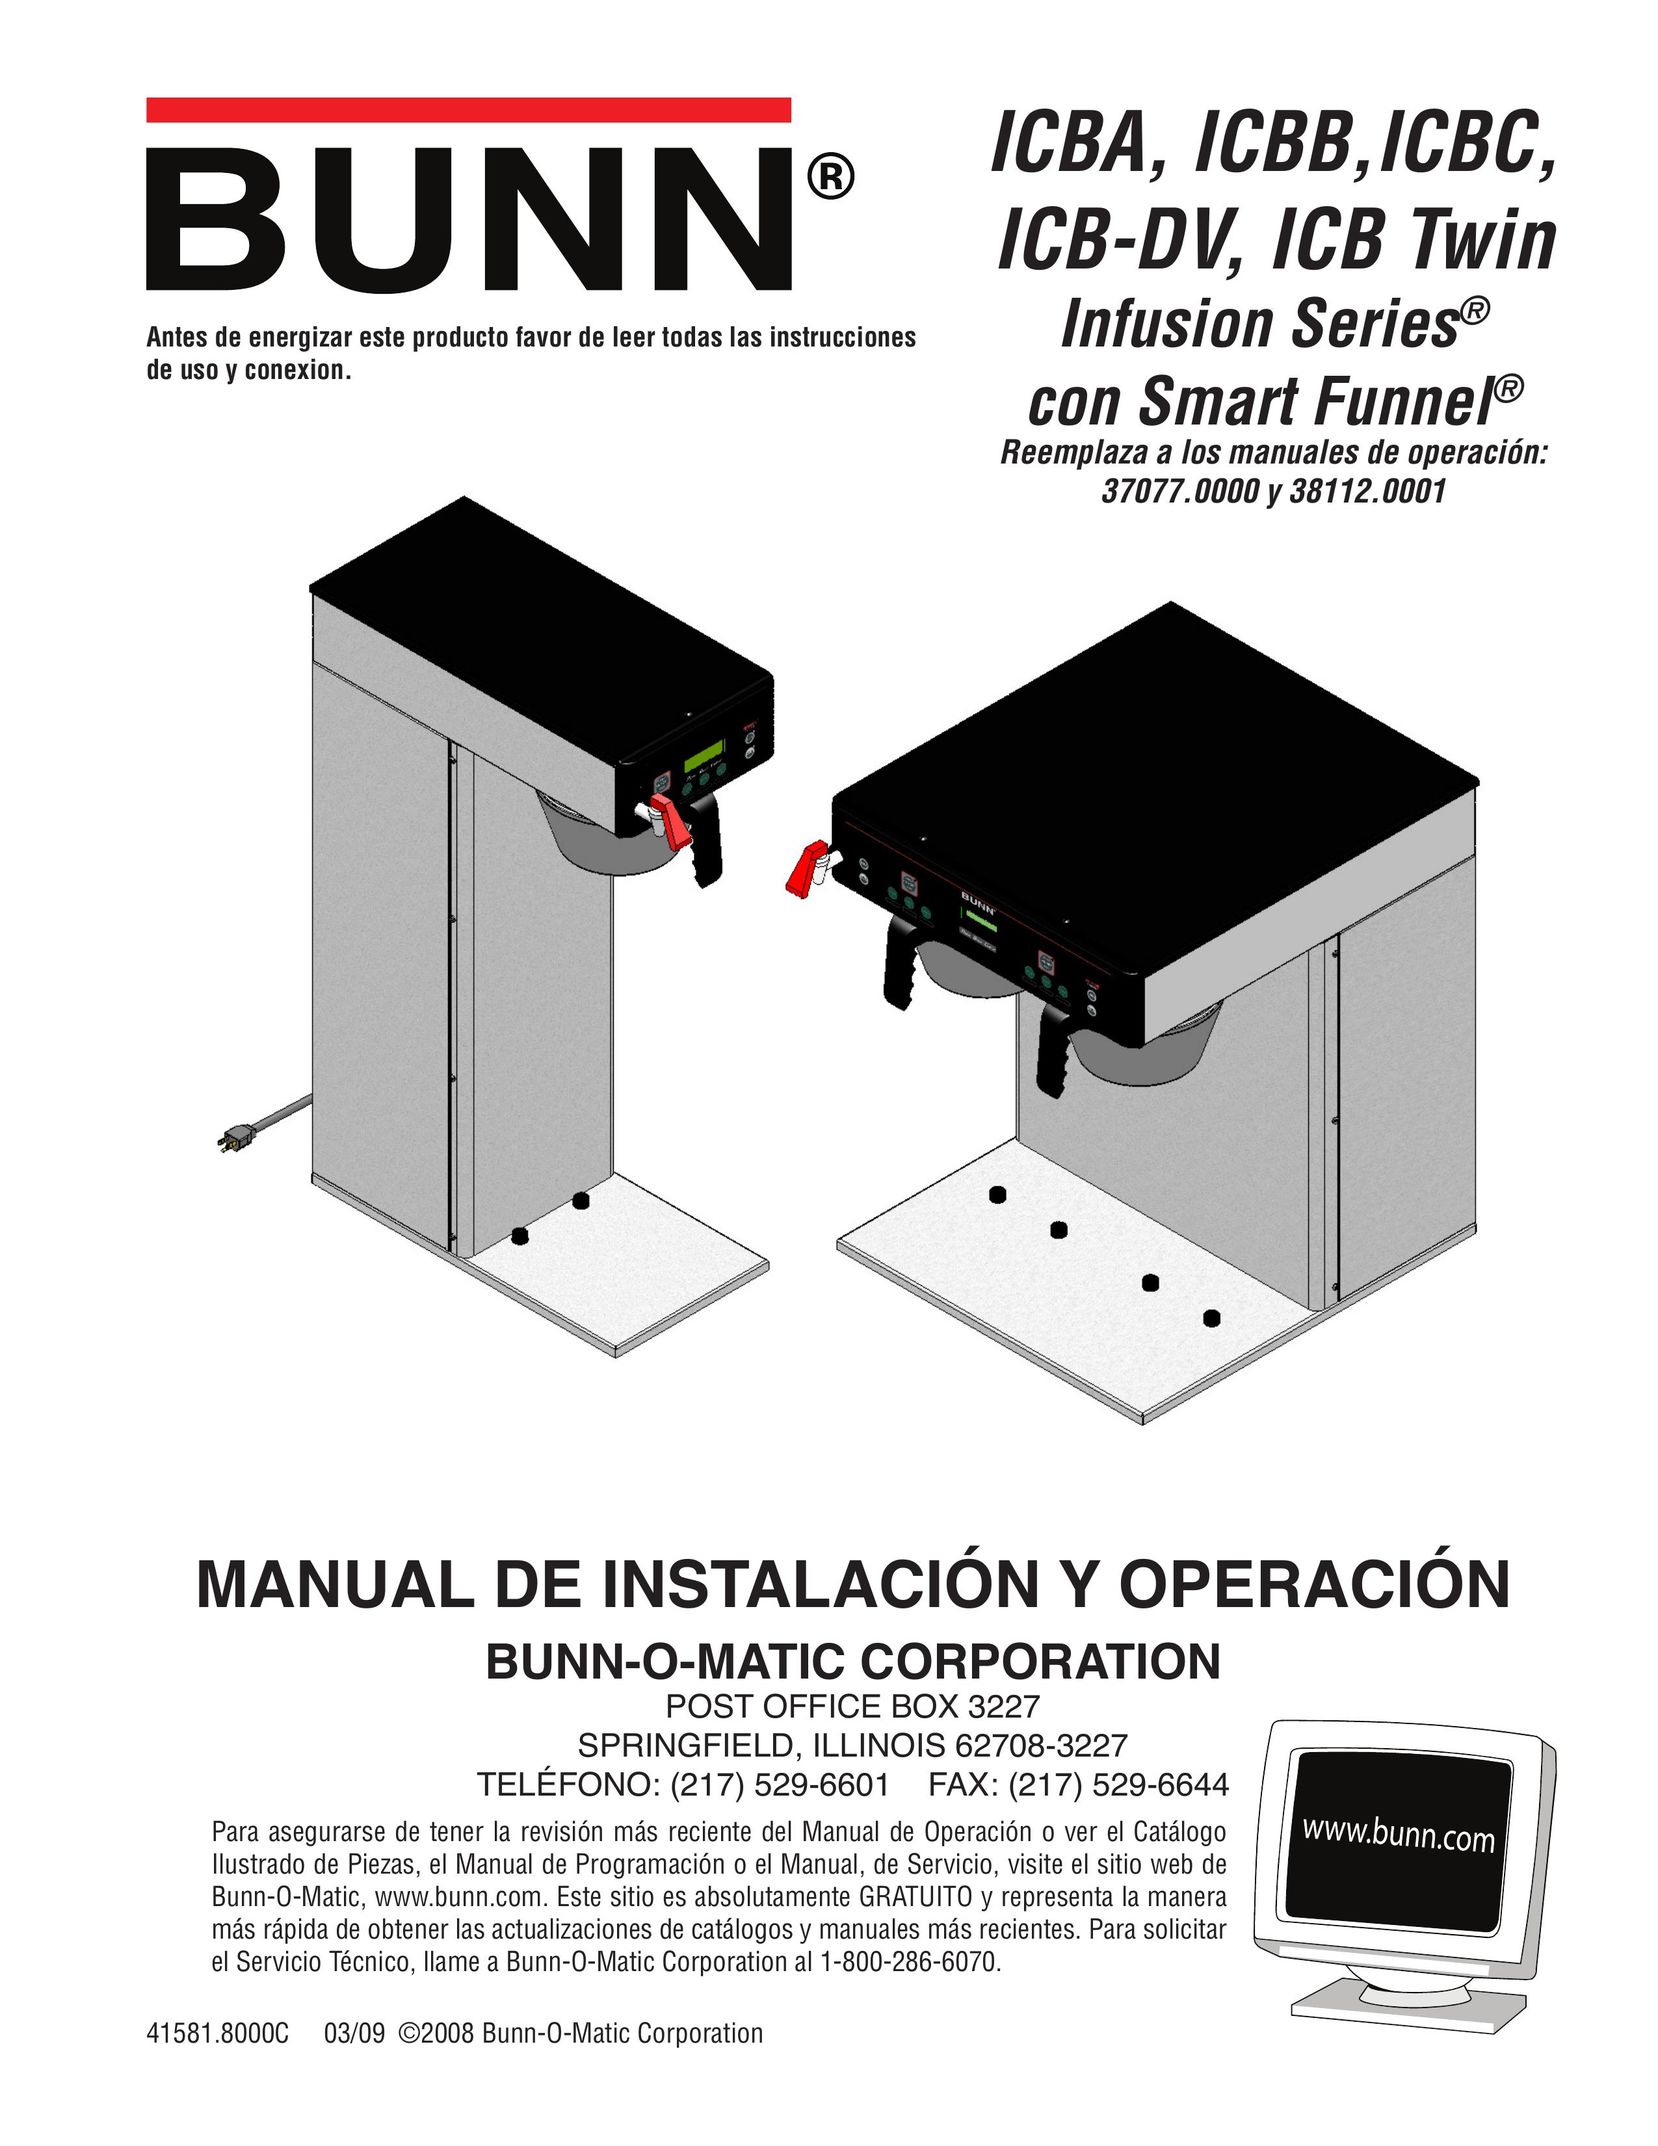 Bunn ICB Espresso Maker User Manual